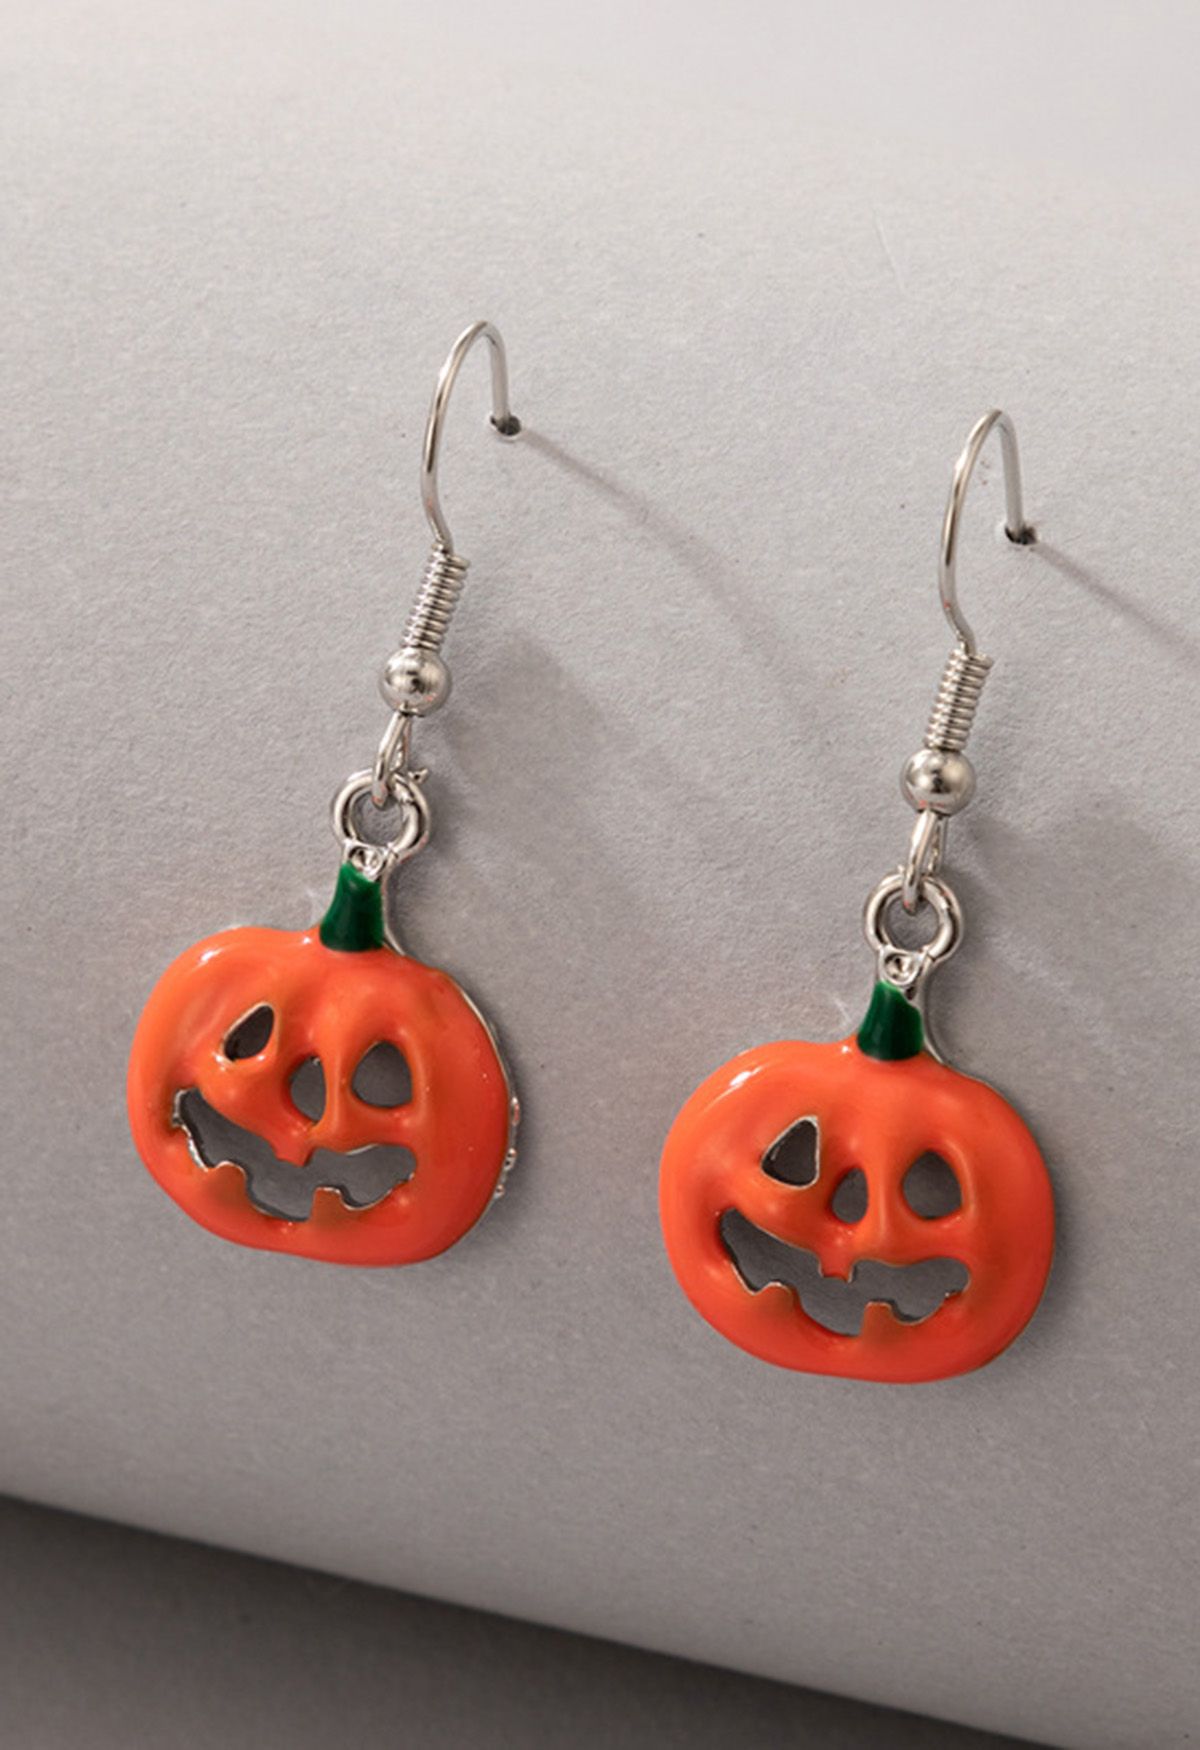 Melting Hollow Out Pumpkin Earrings